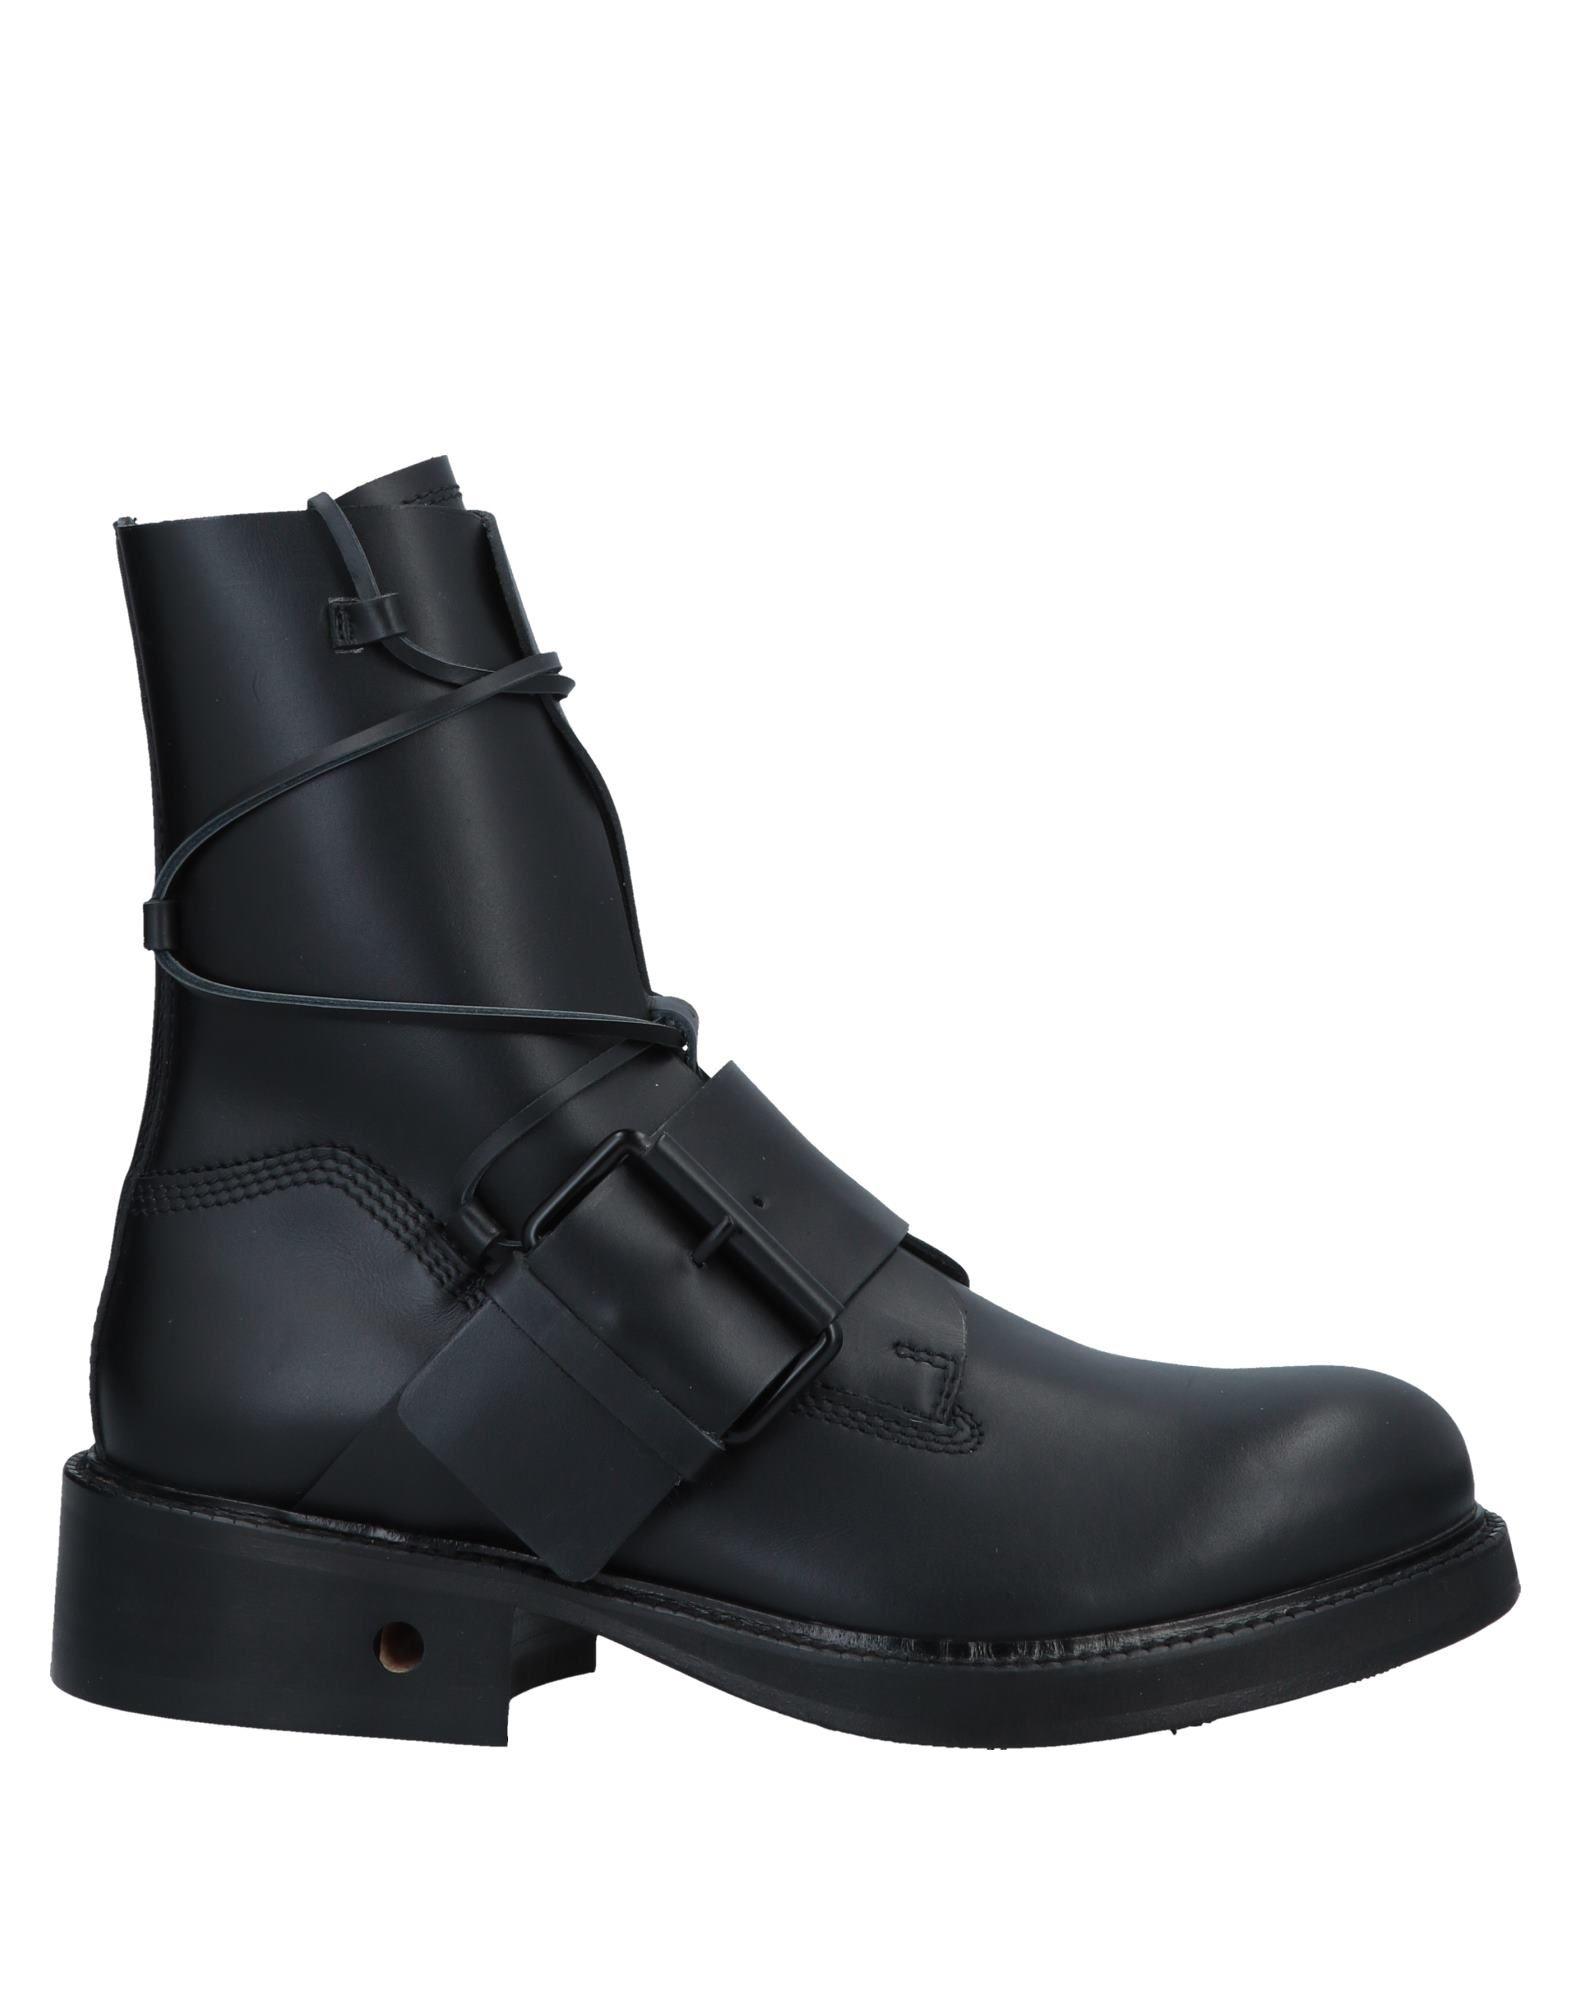 Dirk Bikkembergs Ankle Boots in Black for Men - Lyst